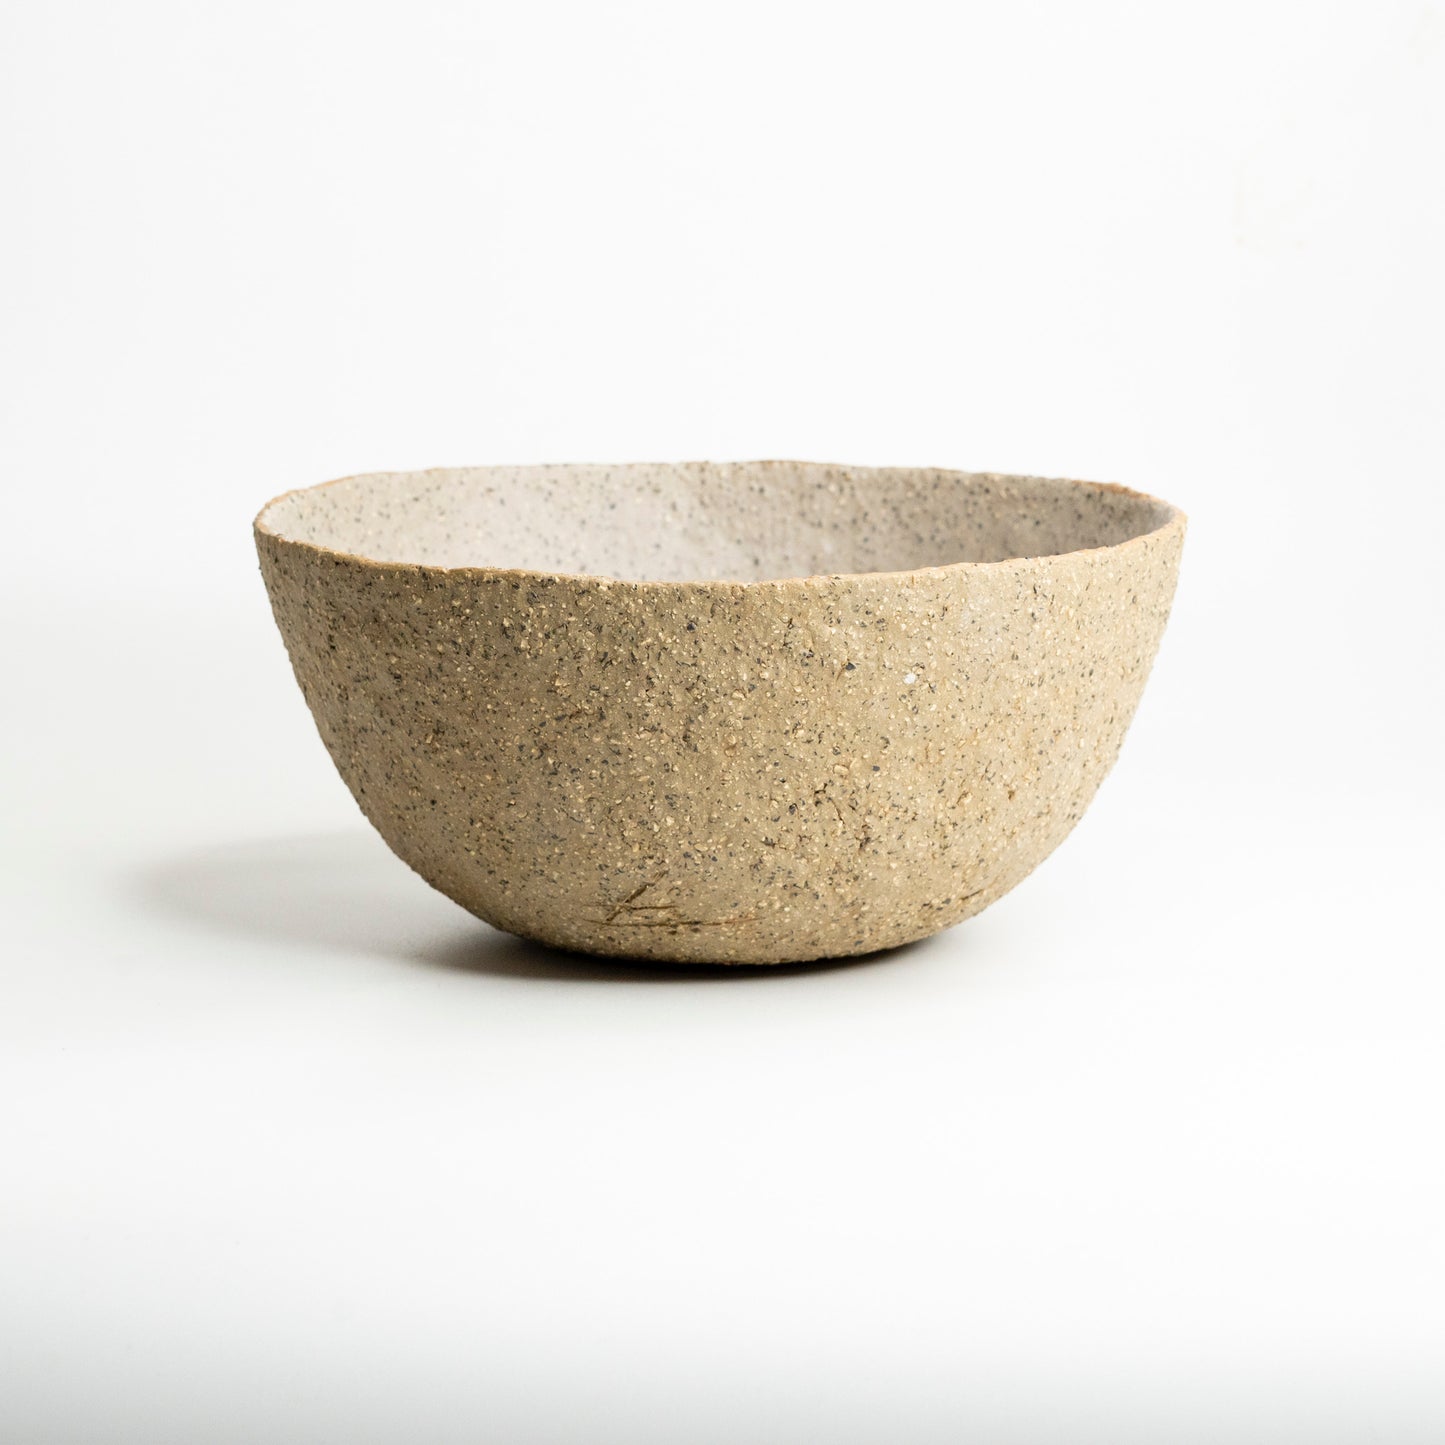 Large, textured bowl